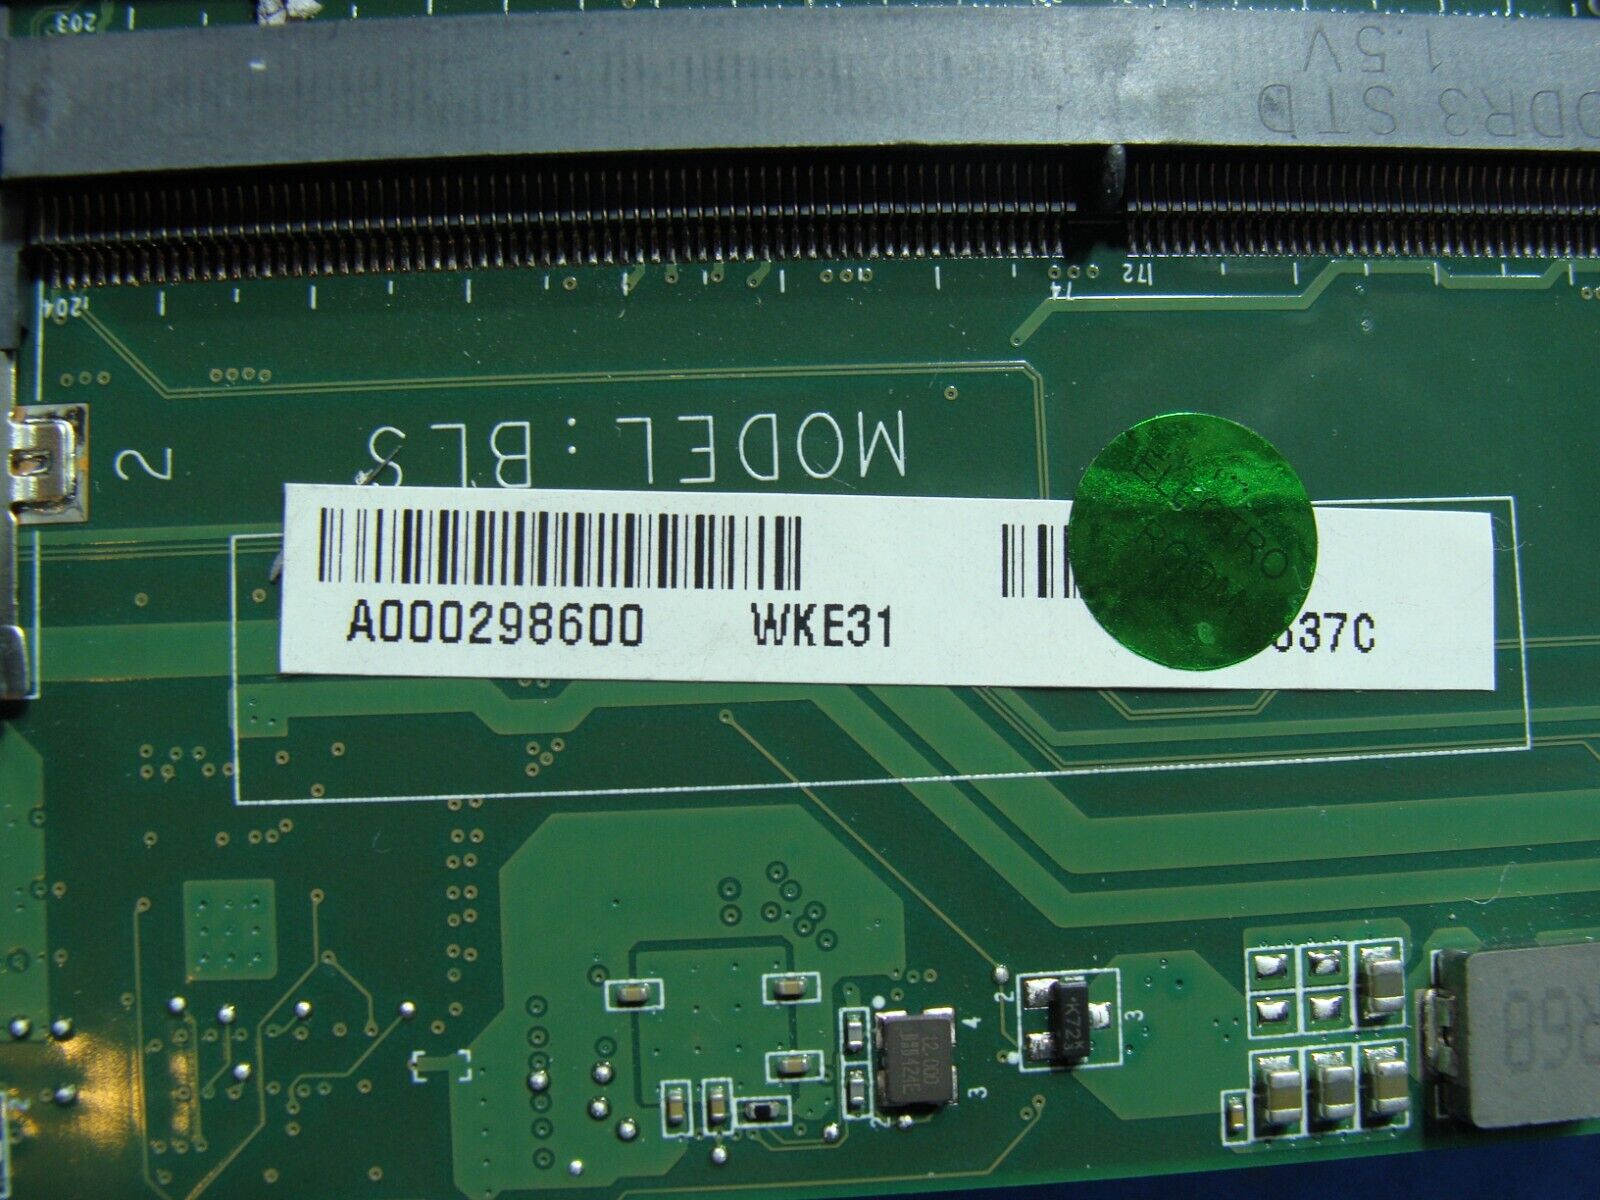 Toshiba Satellite Radius P55W-B5224 i7-4510U 2.0GHz Motherboard A000298600 AS IS